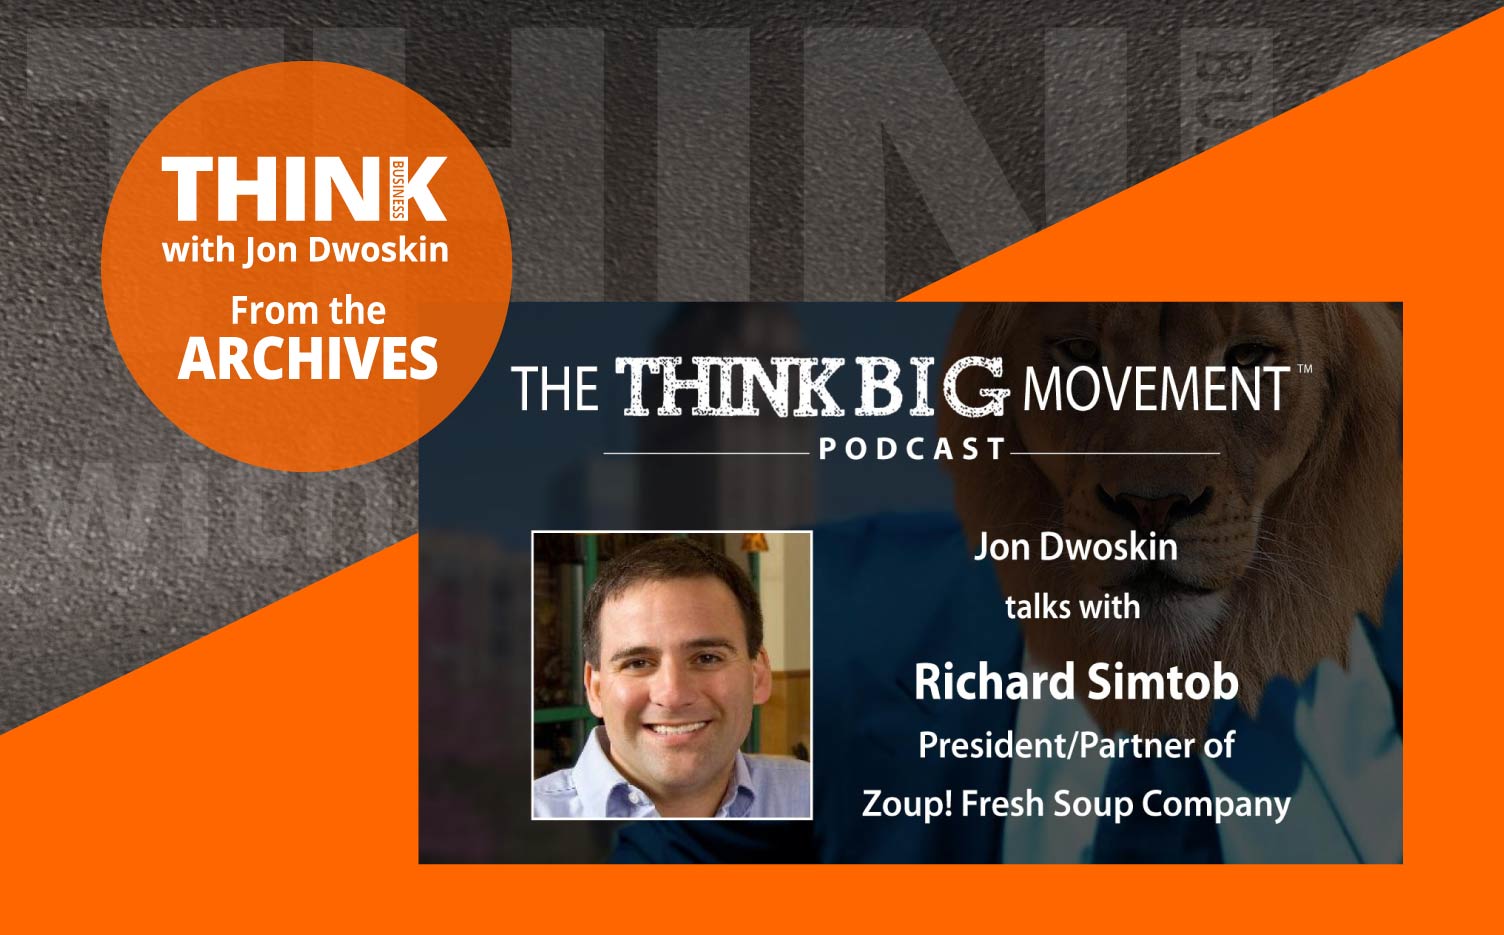 THINK Business Podcast: Richard Simtob, President/Partner of Zoup! Fresh Soup Company